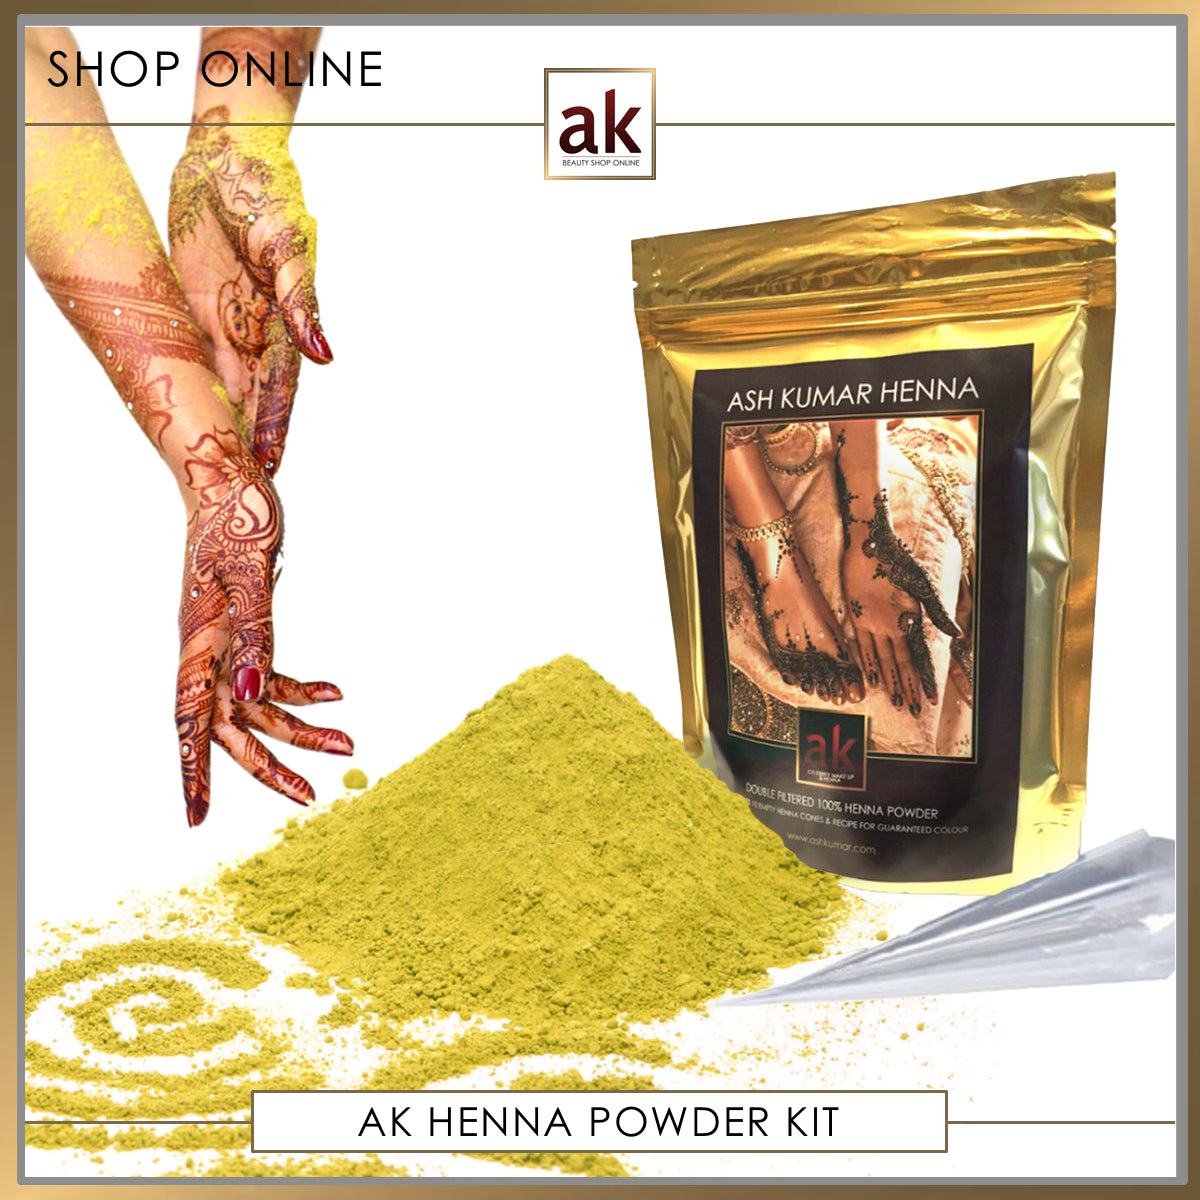 AK EID HENNA KIT WITH HENNA POWDER (INCLUDES 10 EMPTY CONES) & OIL